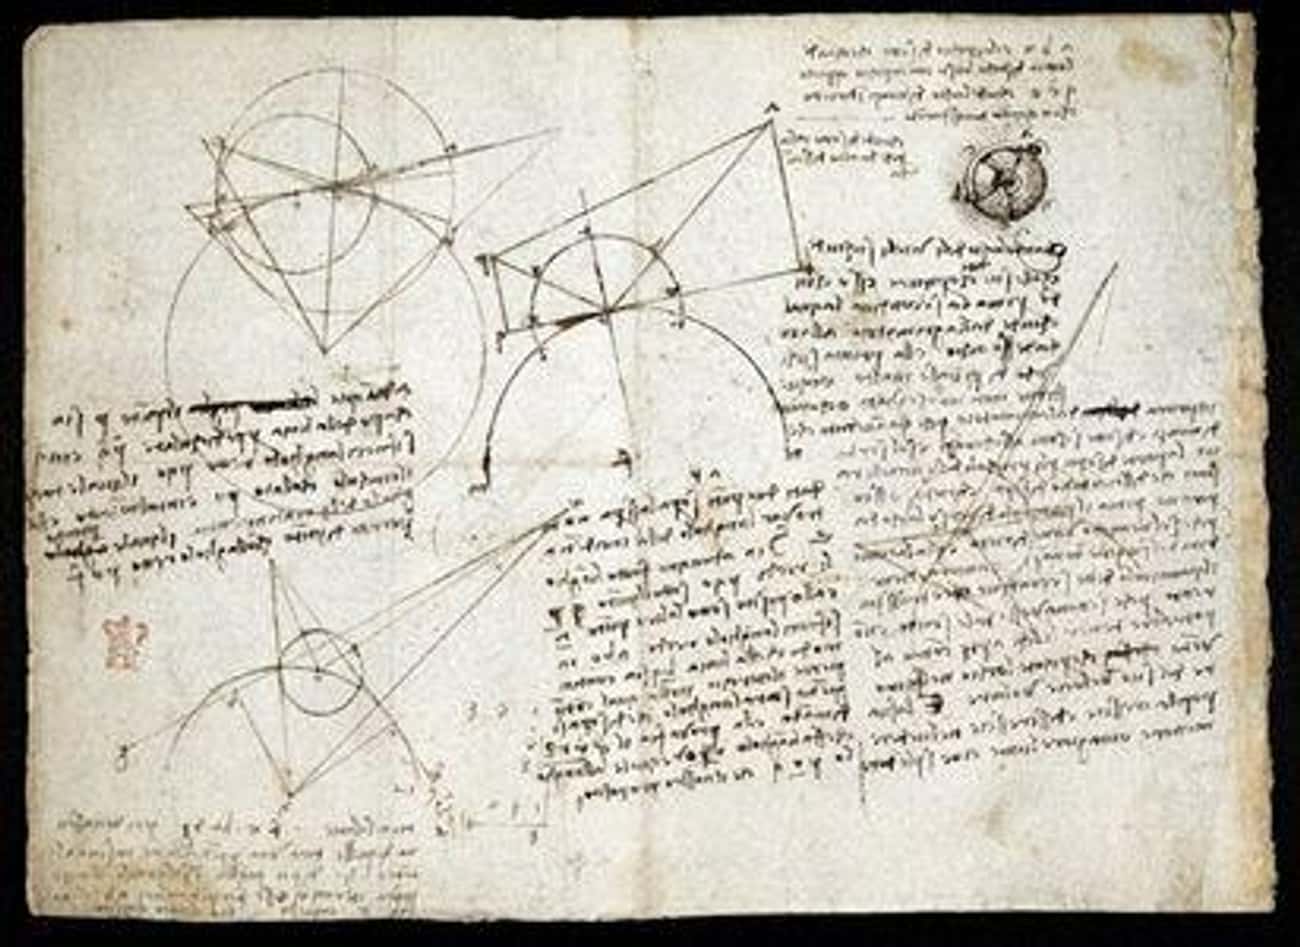 A Notebook Of Leonardo Da Vinci’s, In His Right-To-Left Mirror Writing